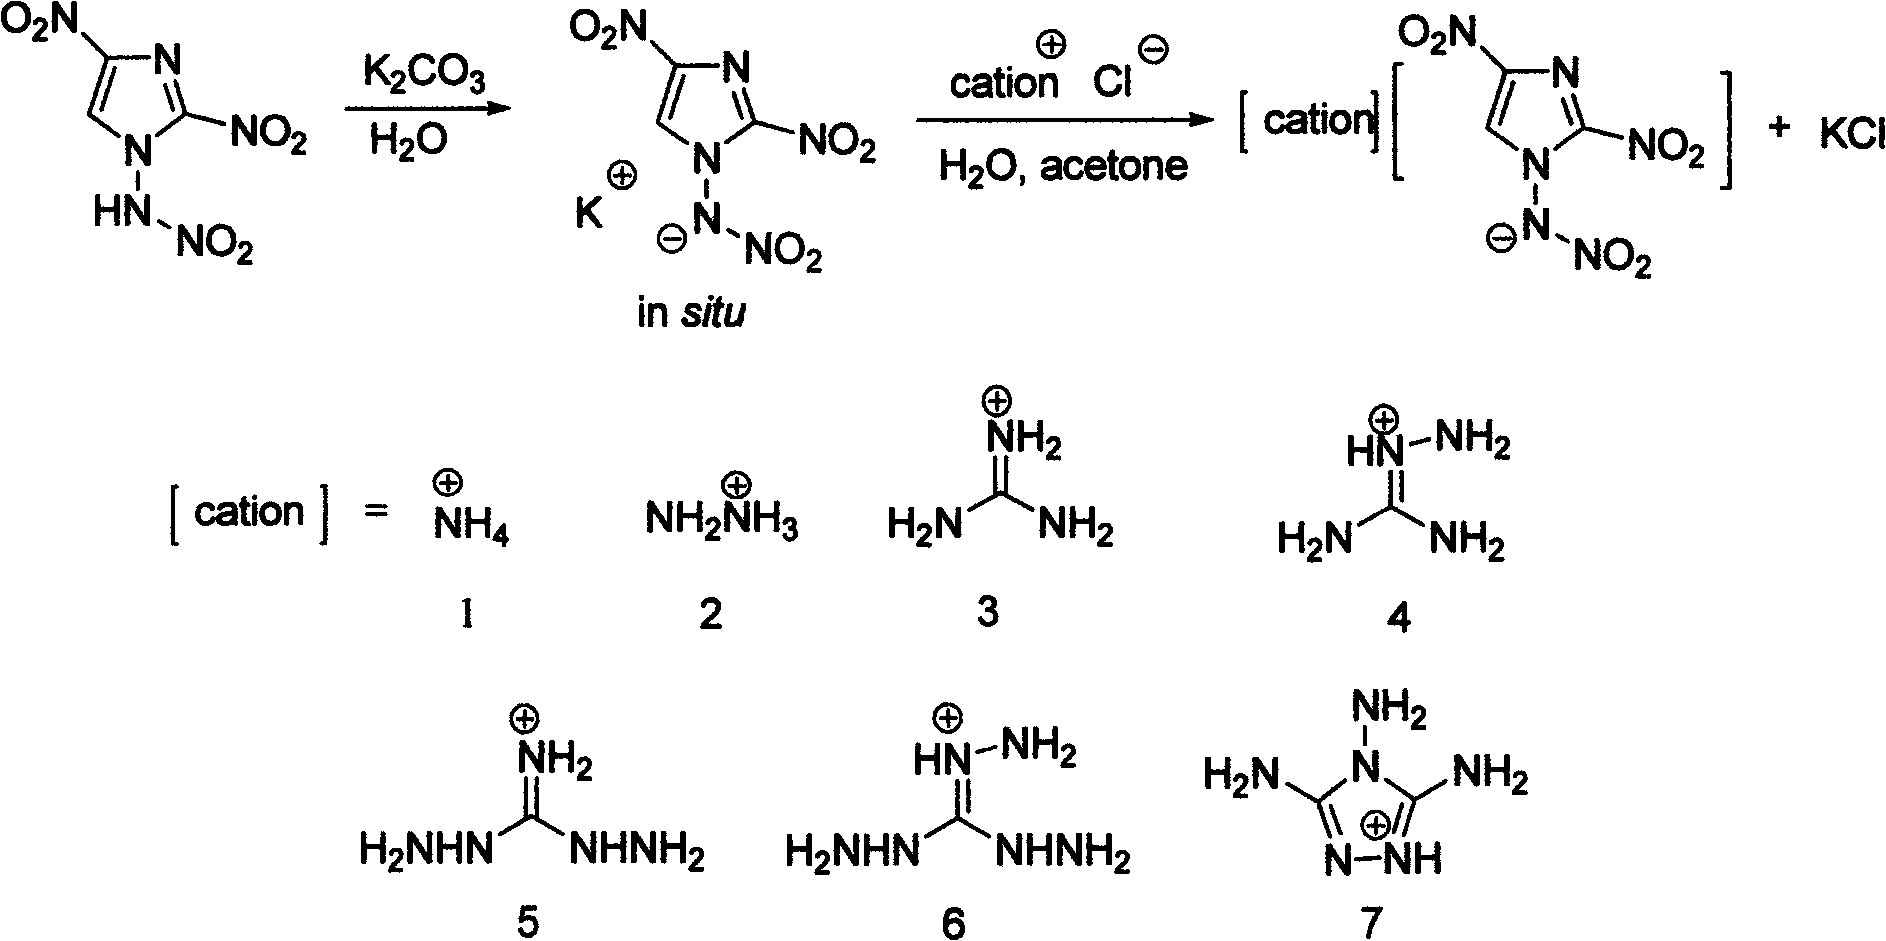 Energetic ion salts of 1-nitramine-2, 4-dimetridazloe and preparation method thereof